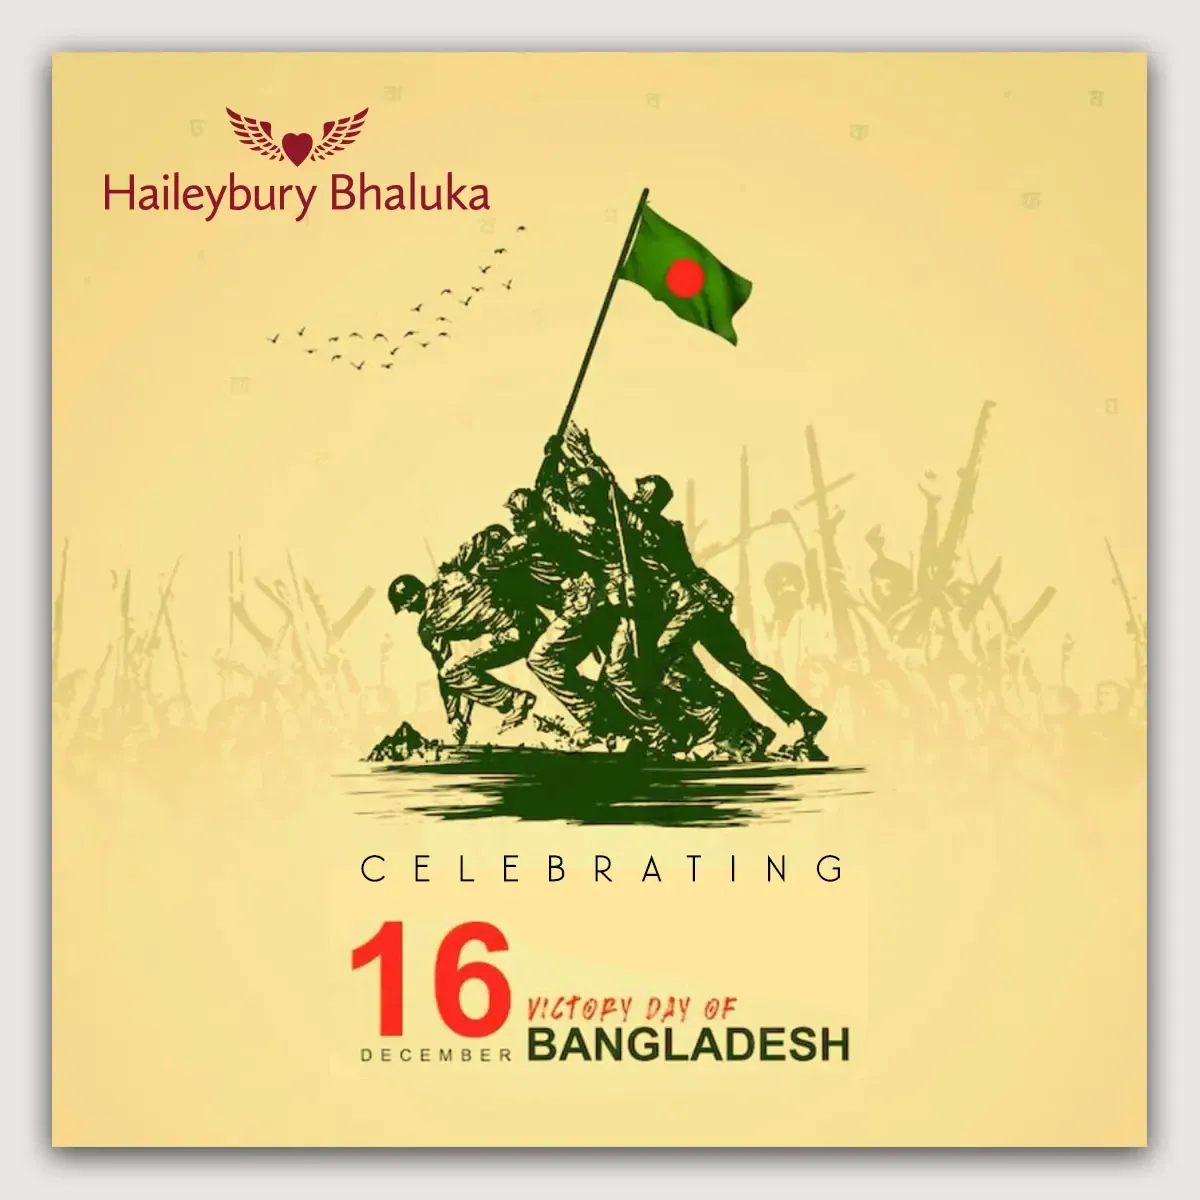 Celebrating Victory Day of Bangladesh